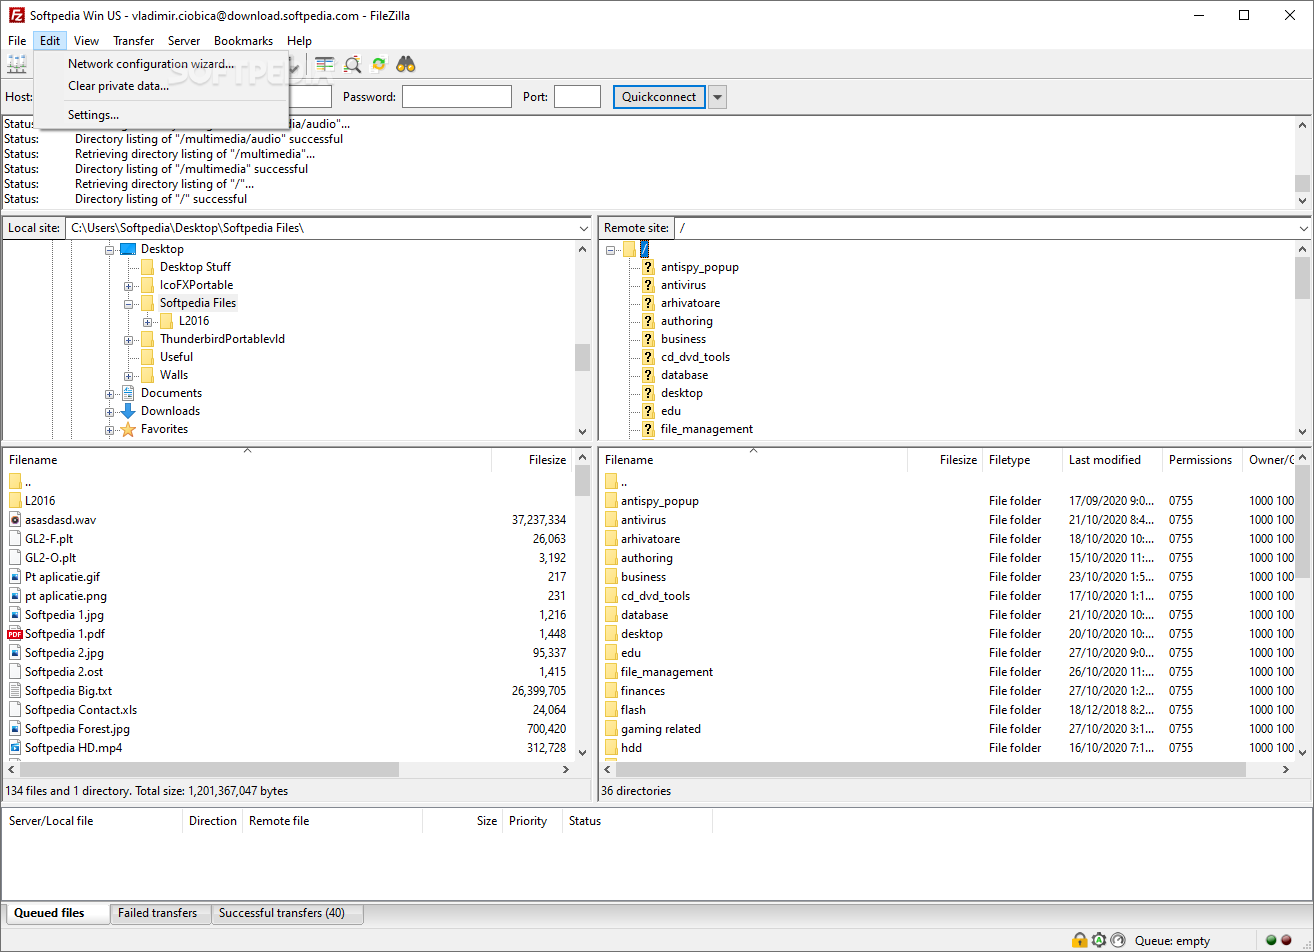 Filezilla ftp download client configure vnc server redhat